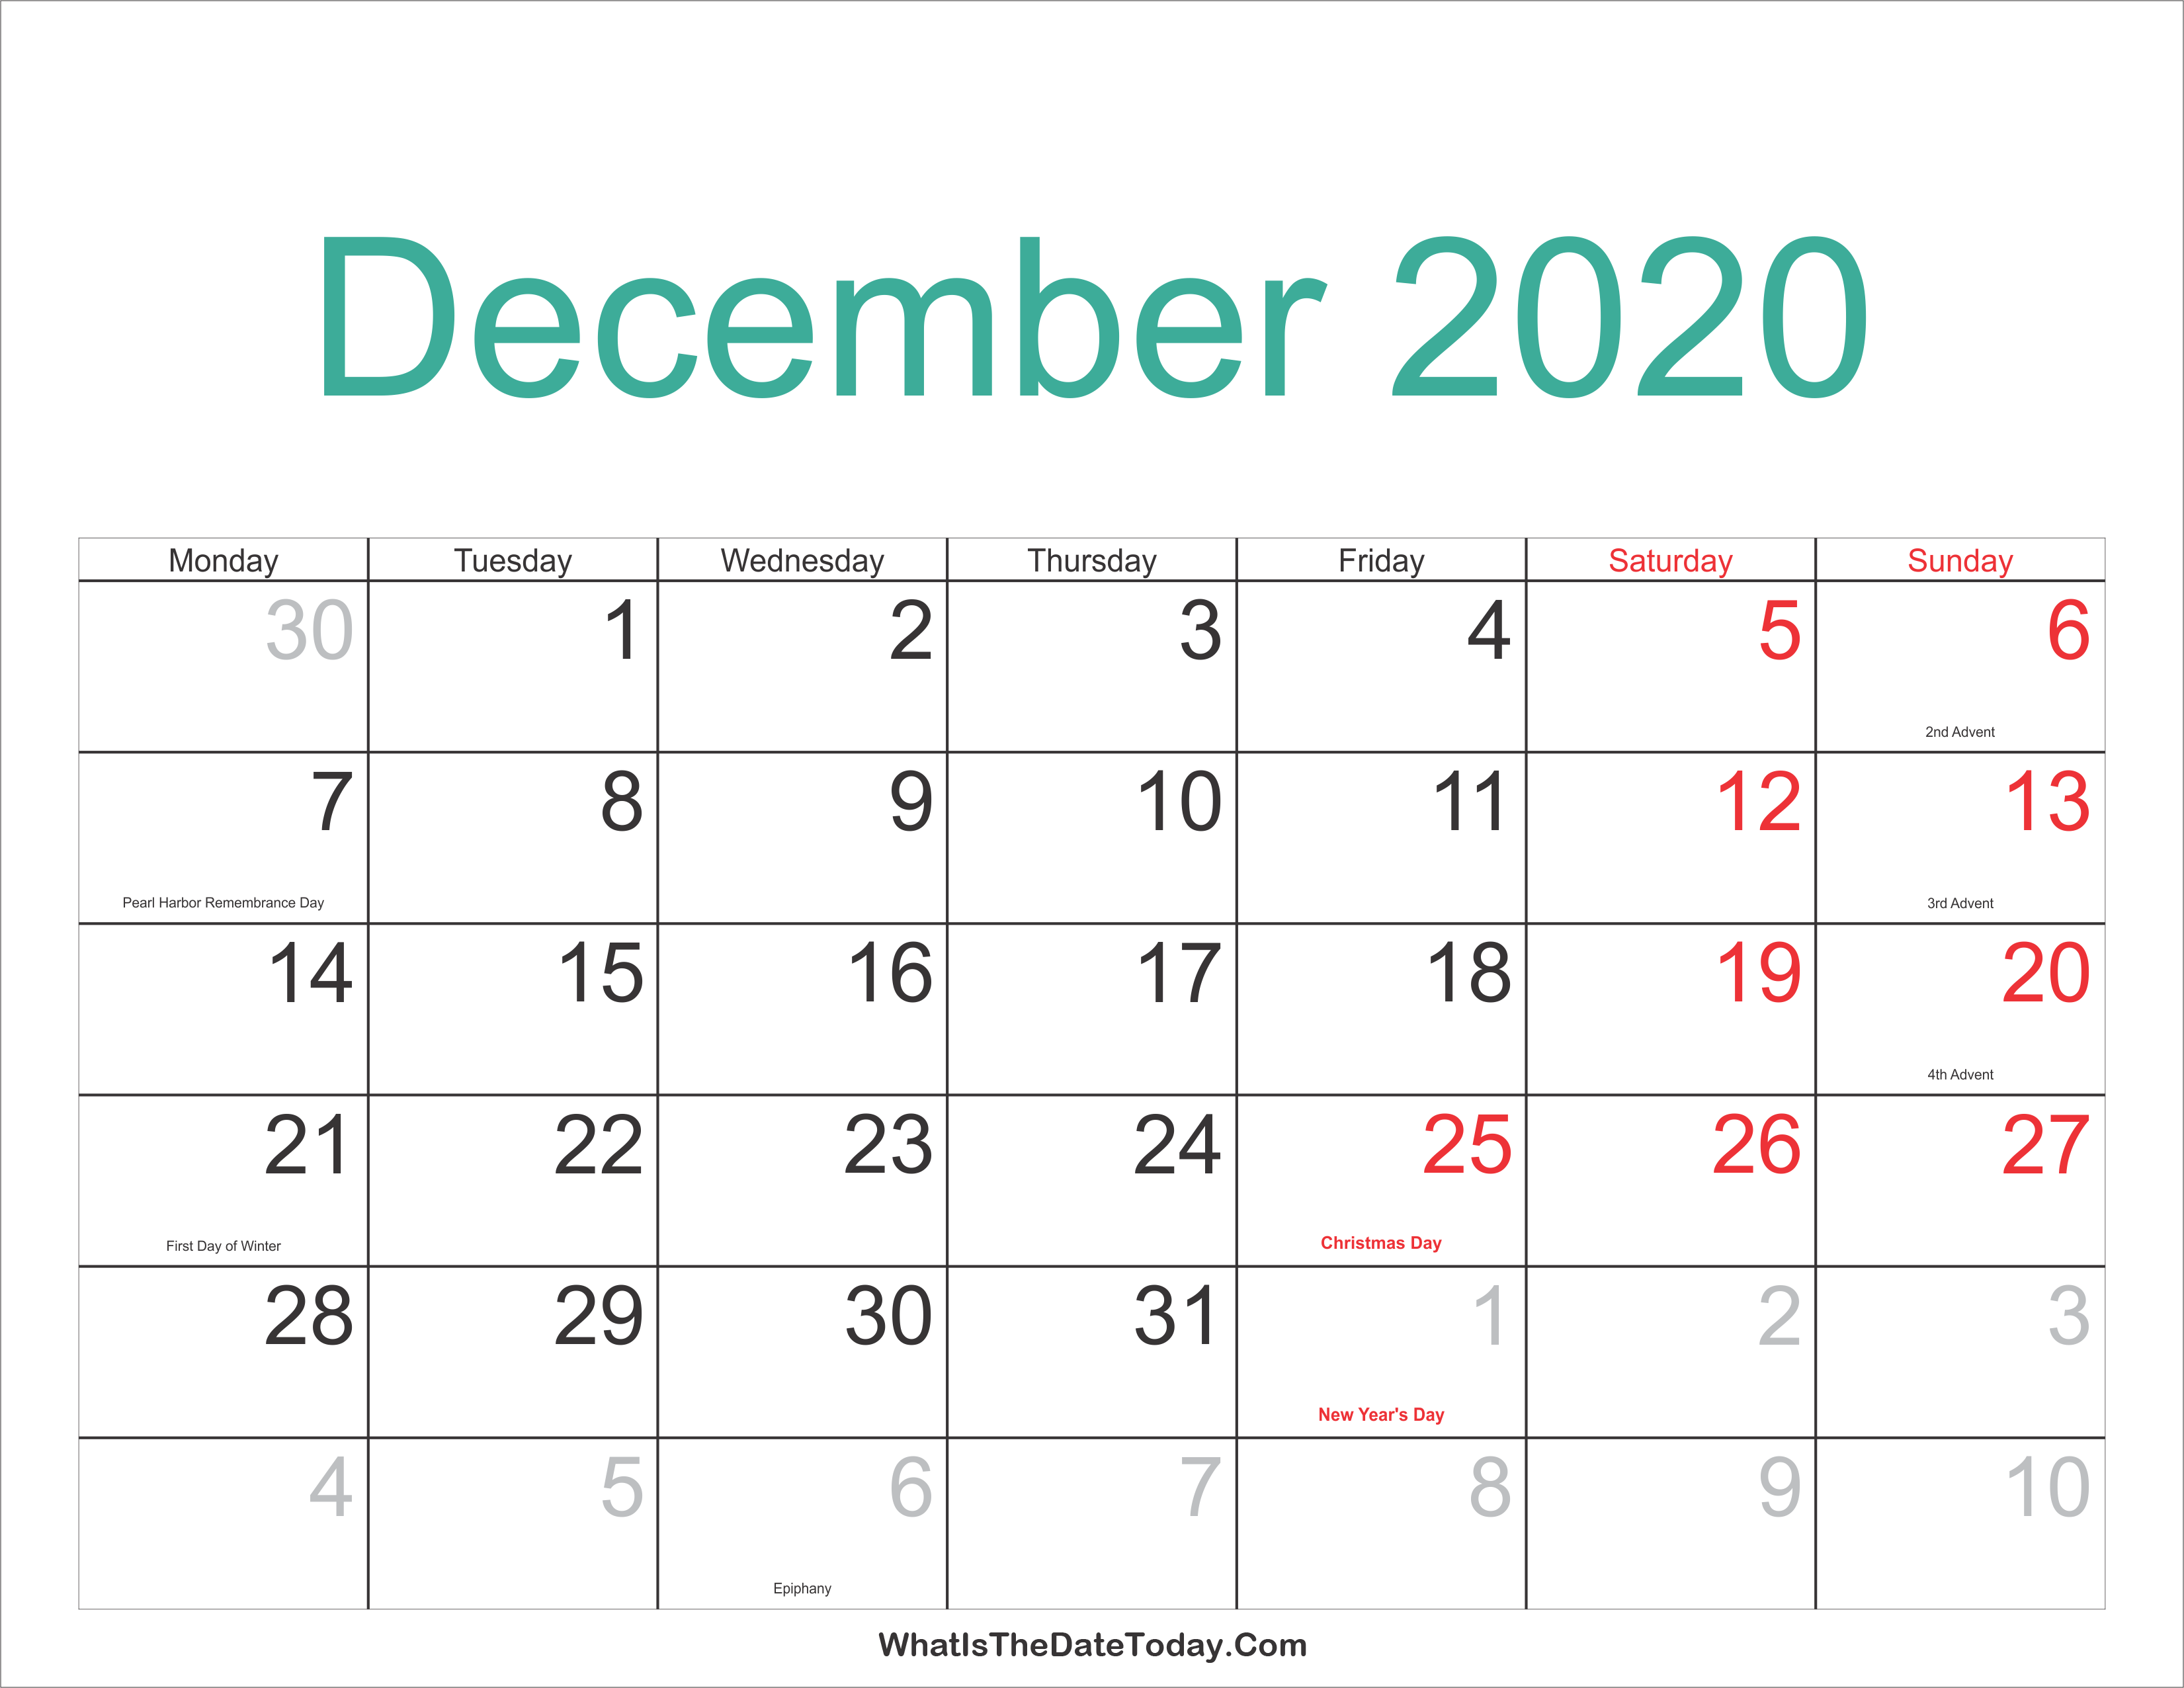 December 2020 Calendar Printable with Holidays